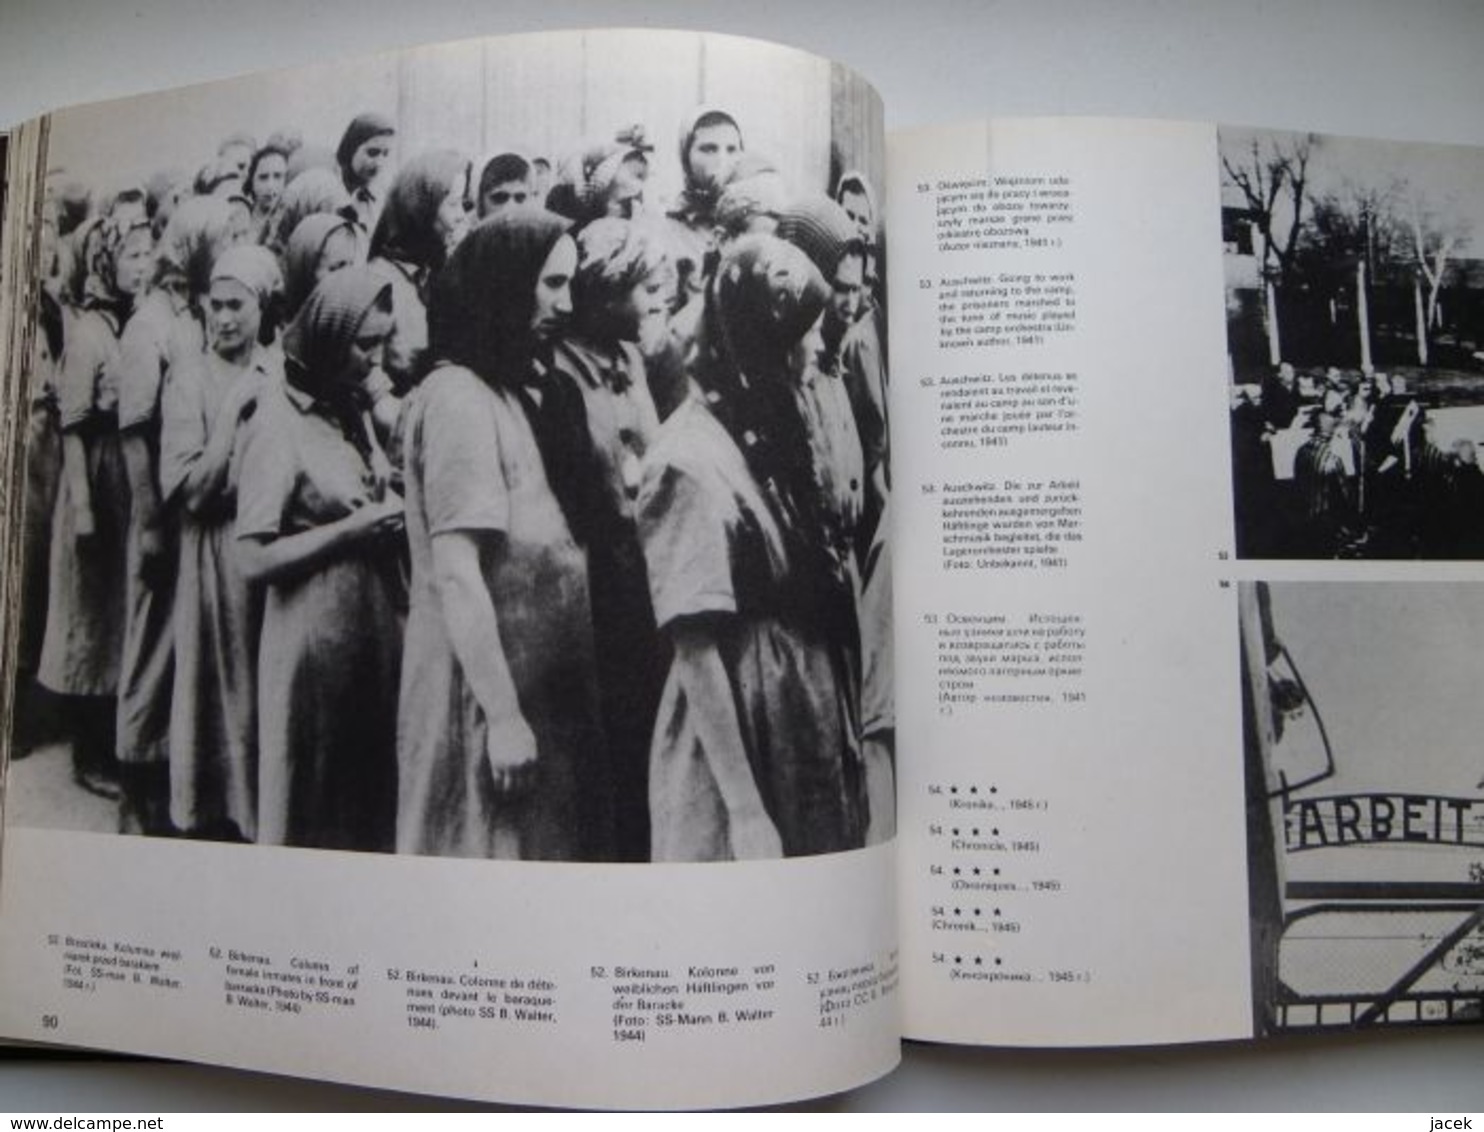 KL Auschwitz German concentration camp / death camp II war / holocaust  / book - album